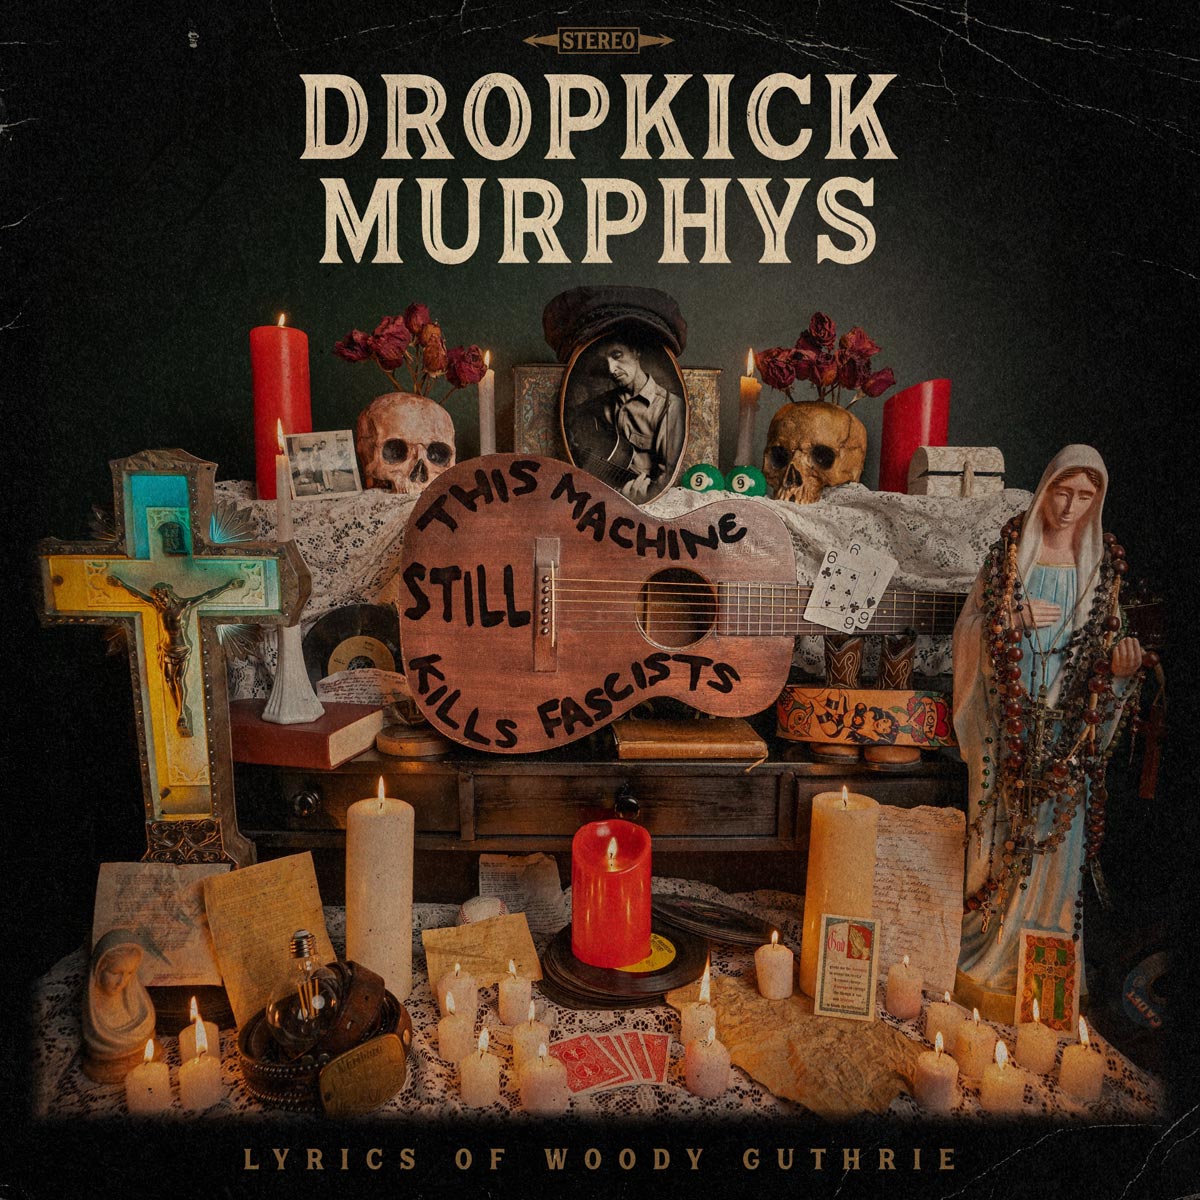 Dropkick Murphys - This Machine Still Kills Facists (Crystal Vinyl) - LP